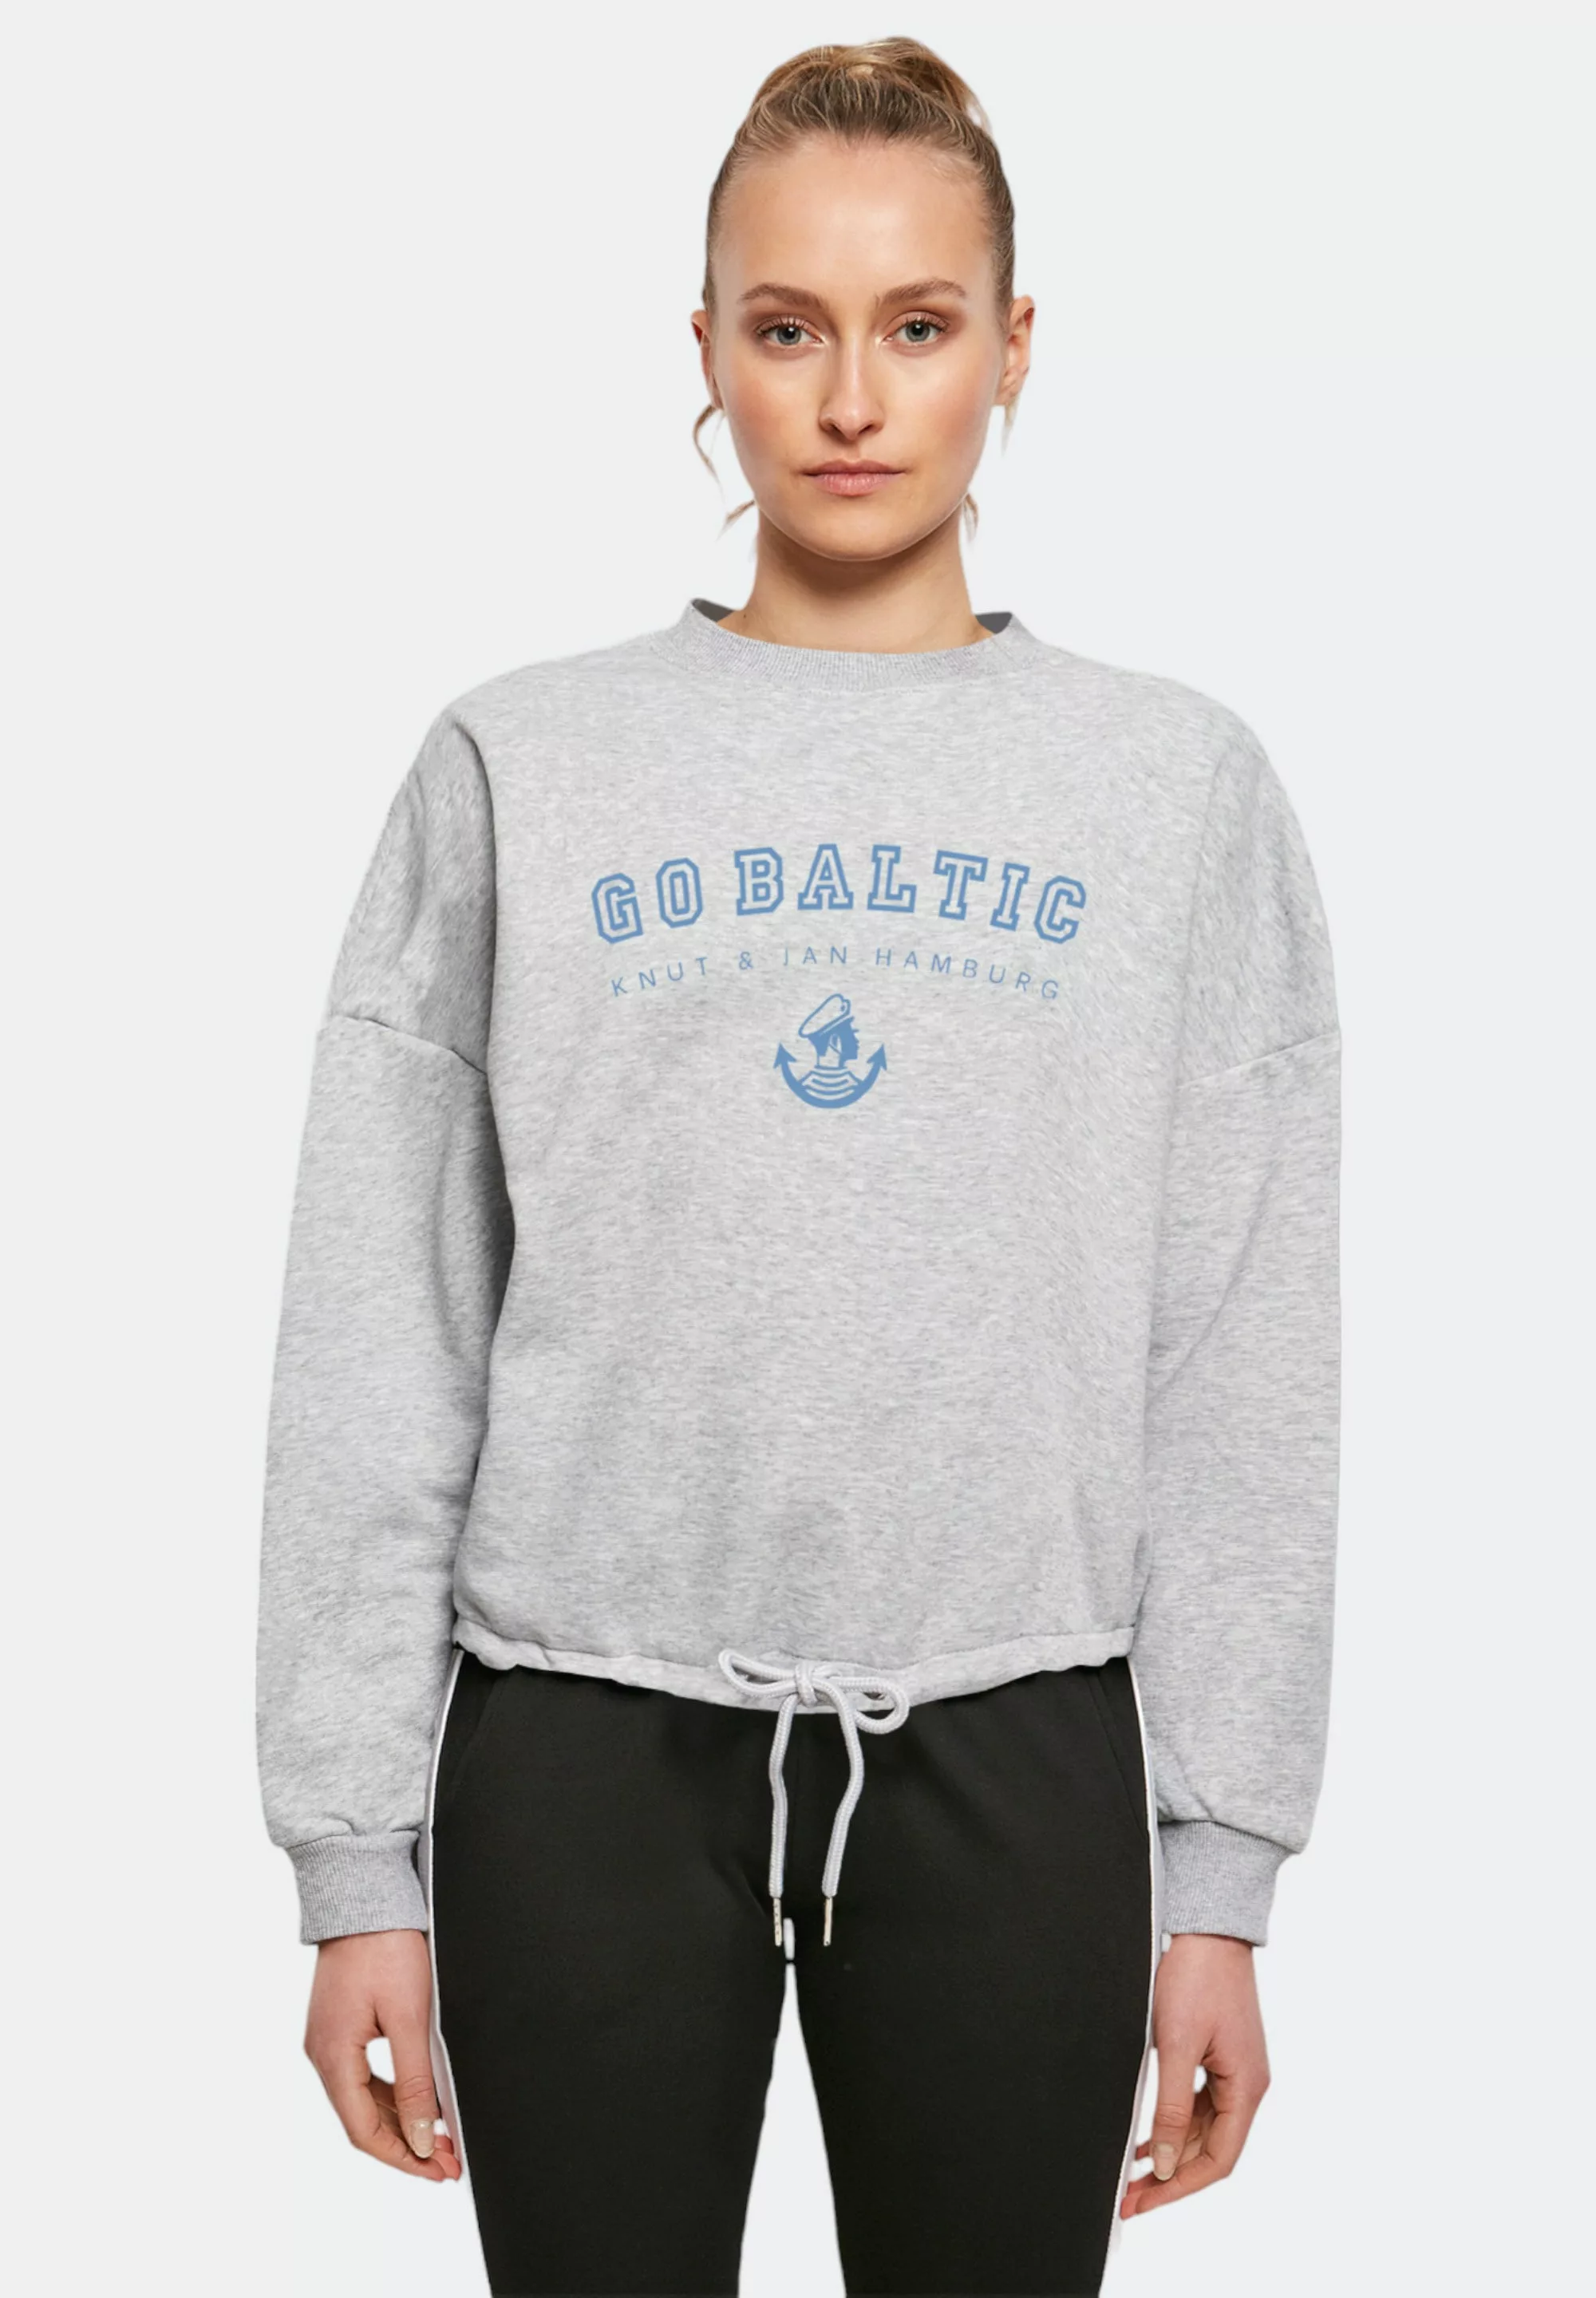 F4NT4STIC Sweatshirt "Go Baltic Knut & Jan Hamburg", Print günstig online kaufen